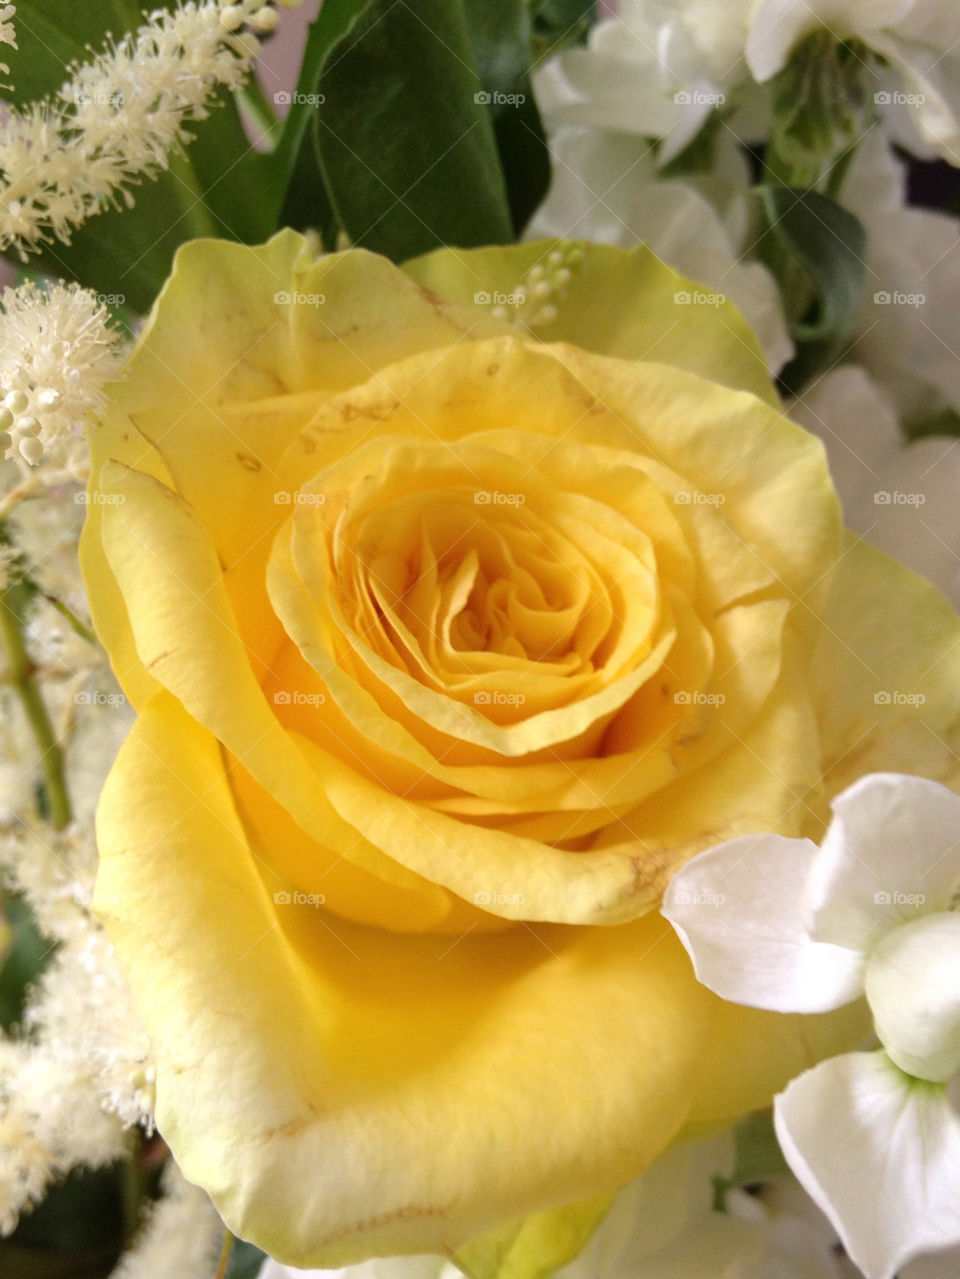 sweden yellow ros roses by casperlo